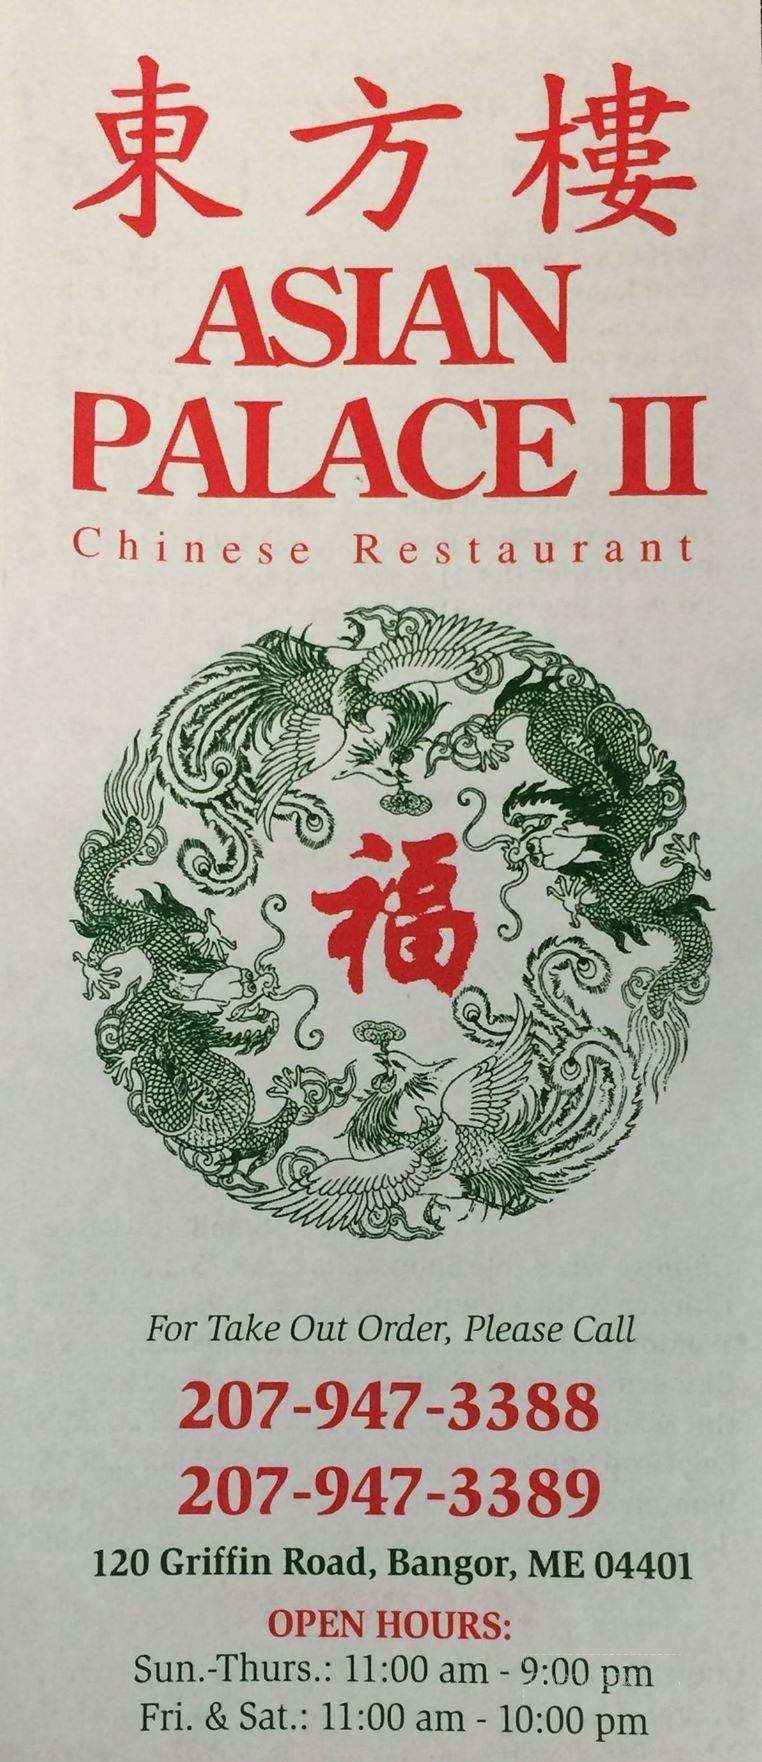 Asian Palace II Chinese Restaurant - Bangor, ME